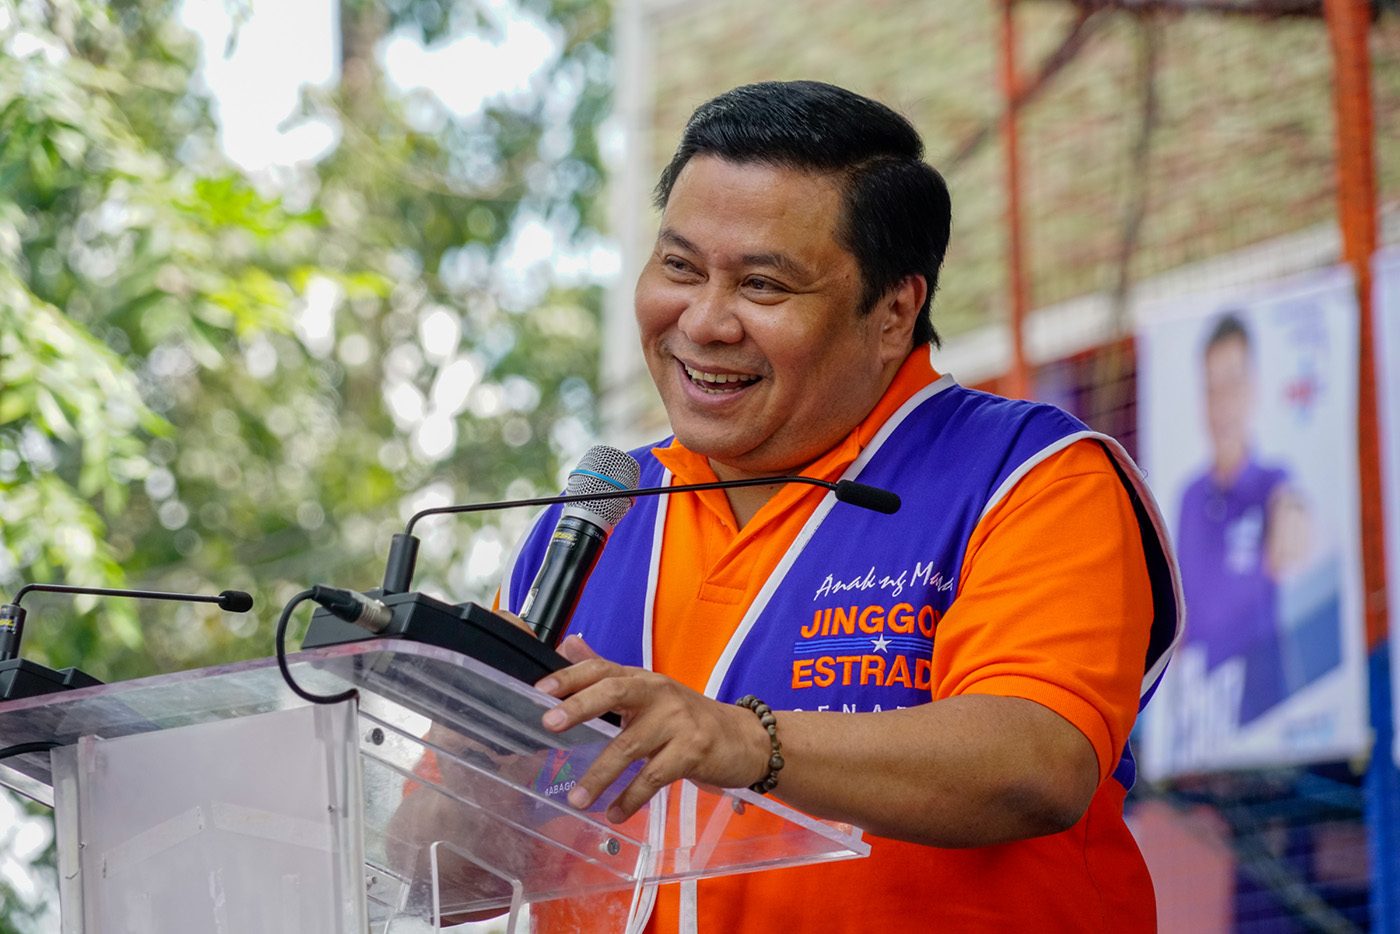 Jinggoy Estrada, Francis Tolentino poke fun at De Lima in campaign speeches